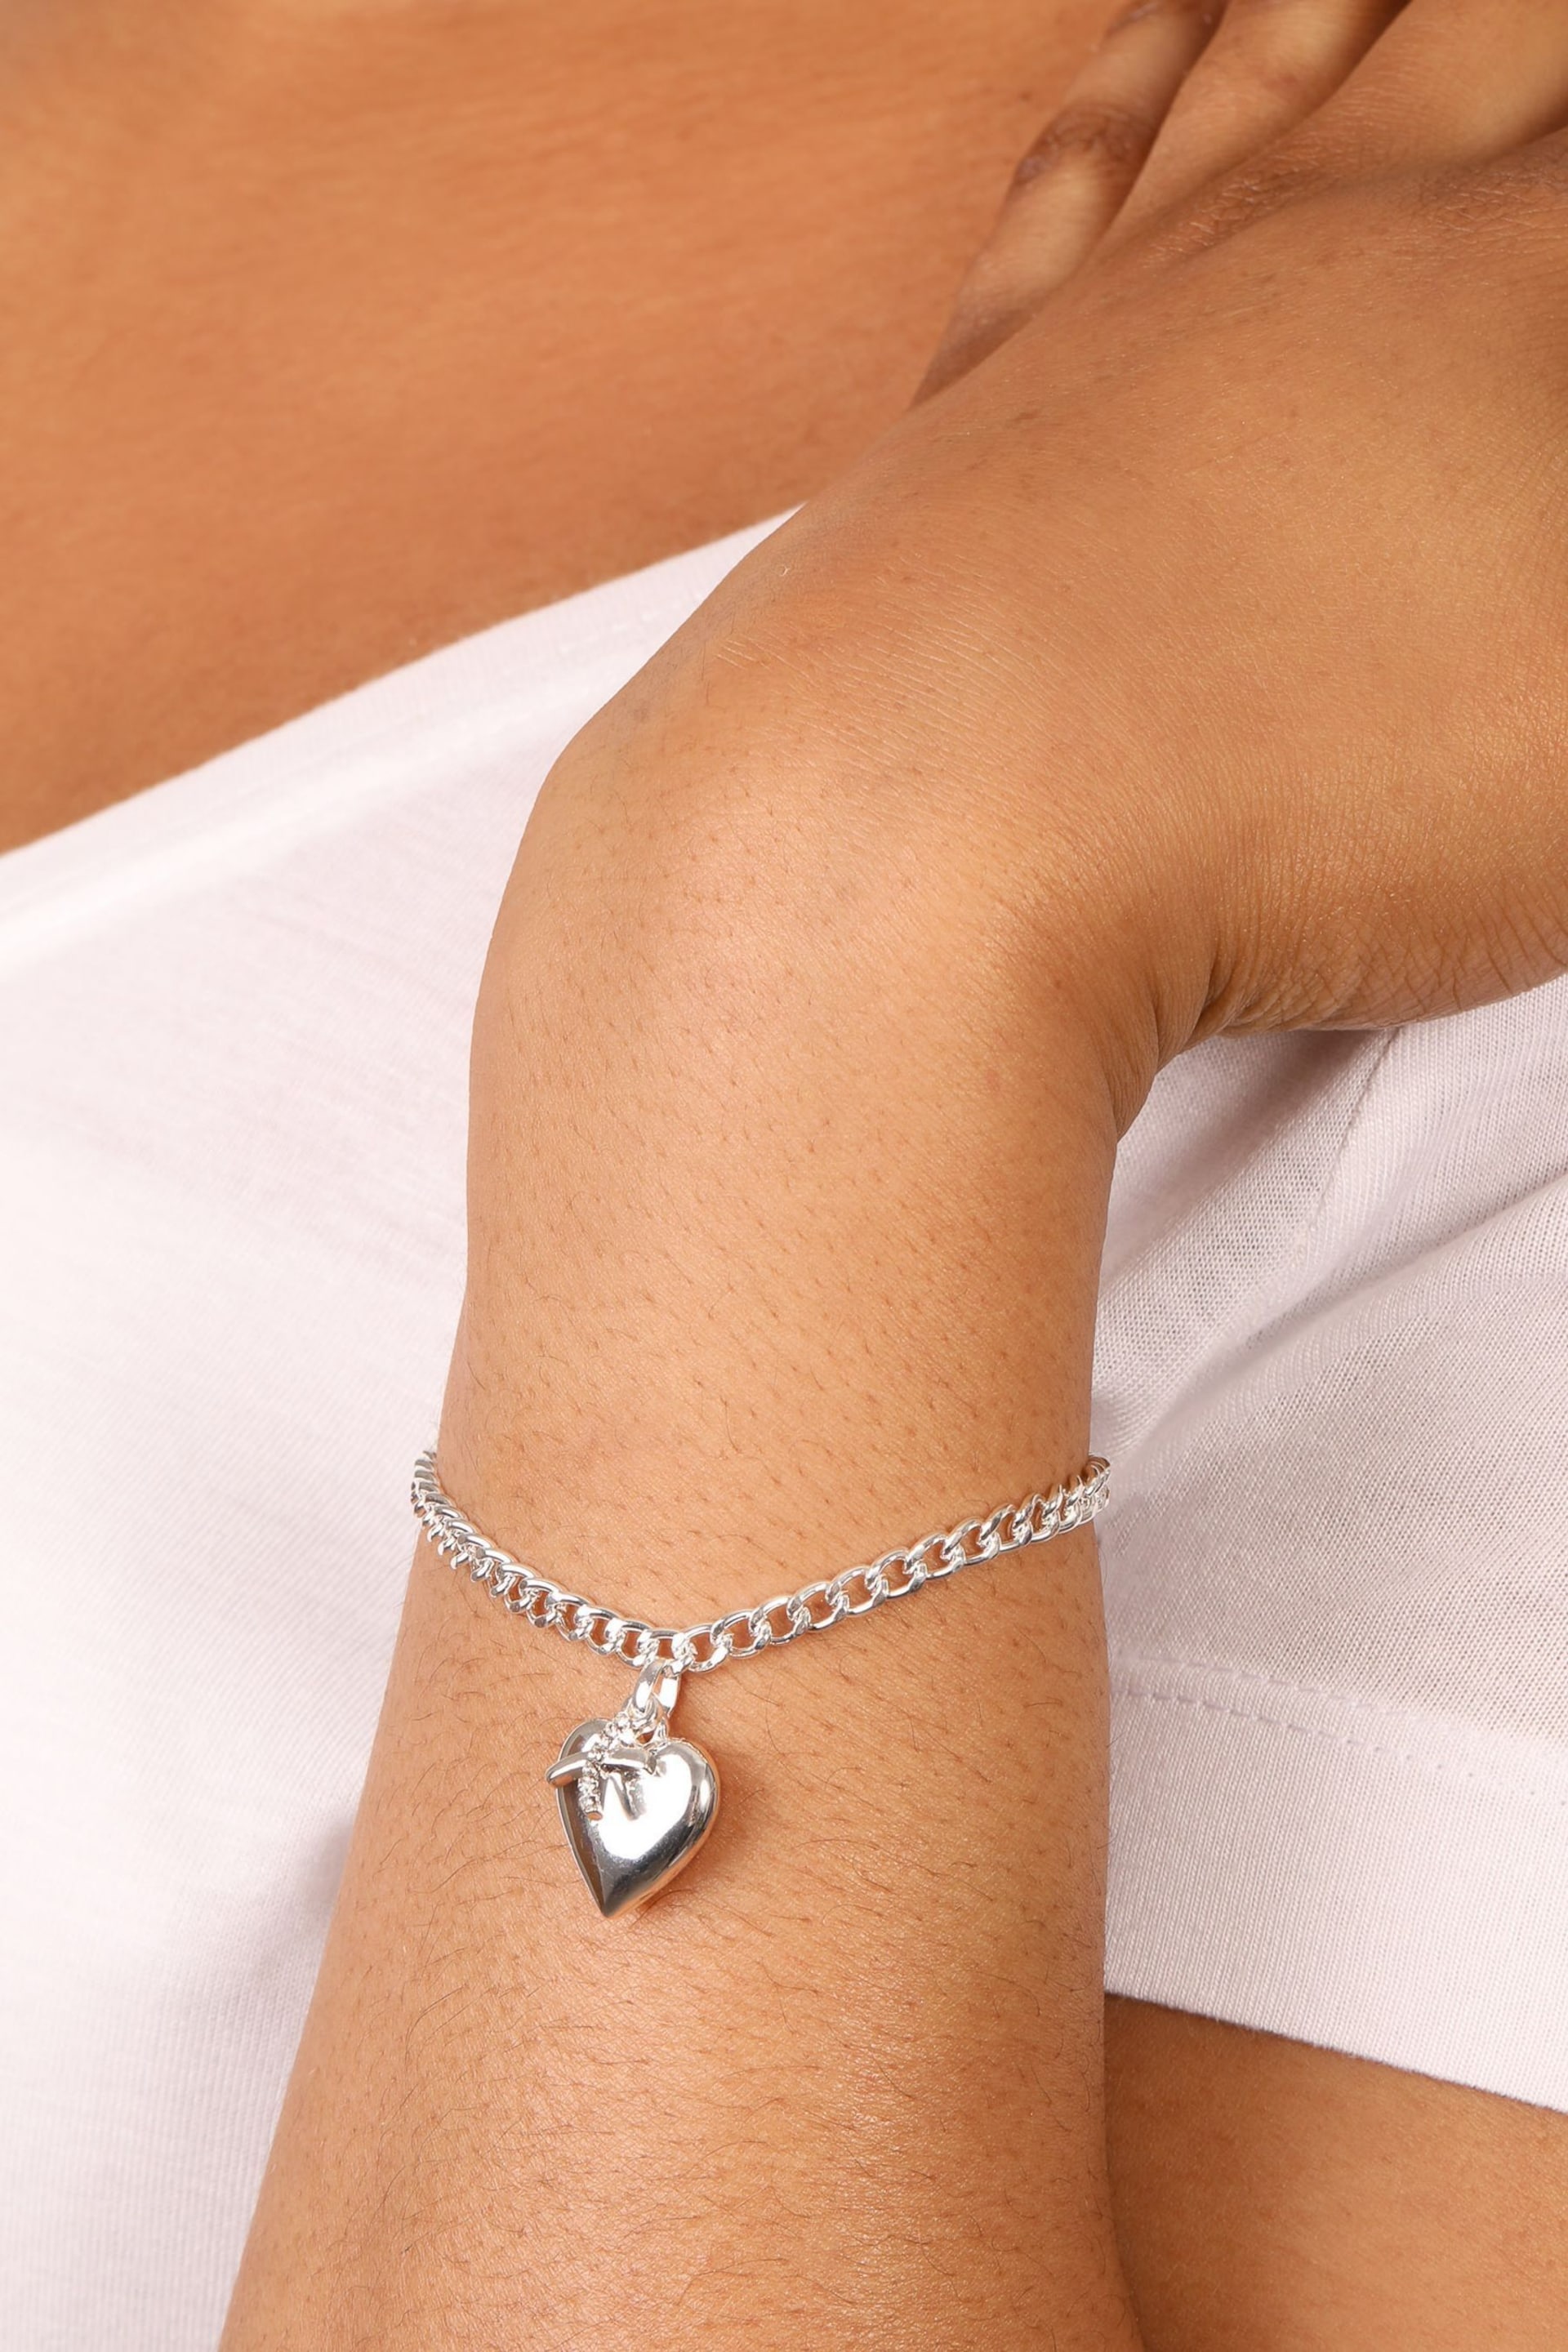 Caramel Jewellery London Silver Chunky 'Cherish' Bracelet - Image 1 of 4